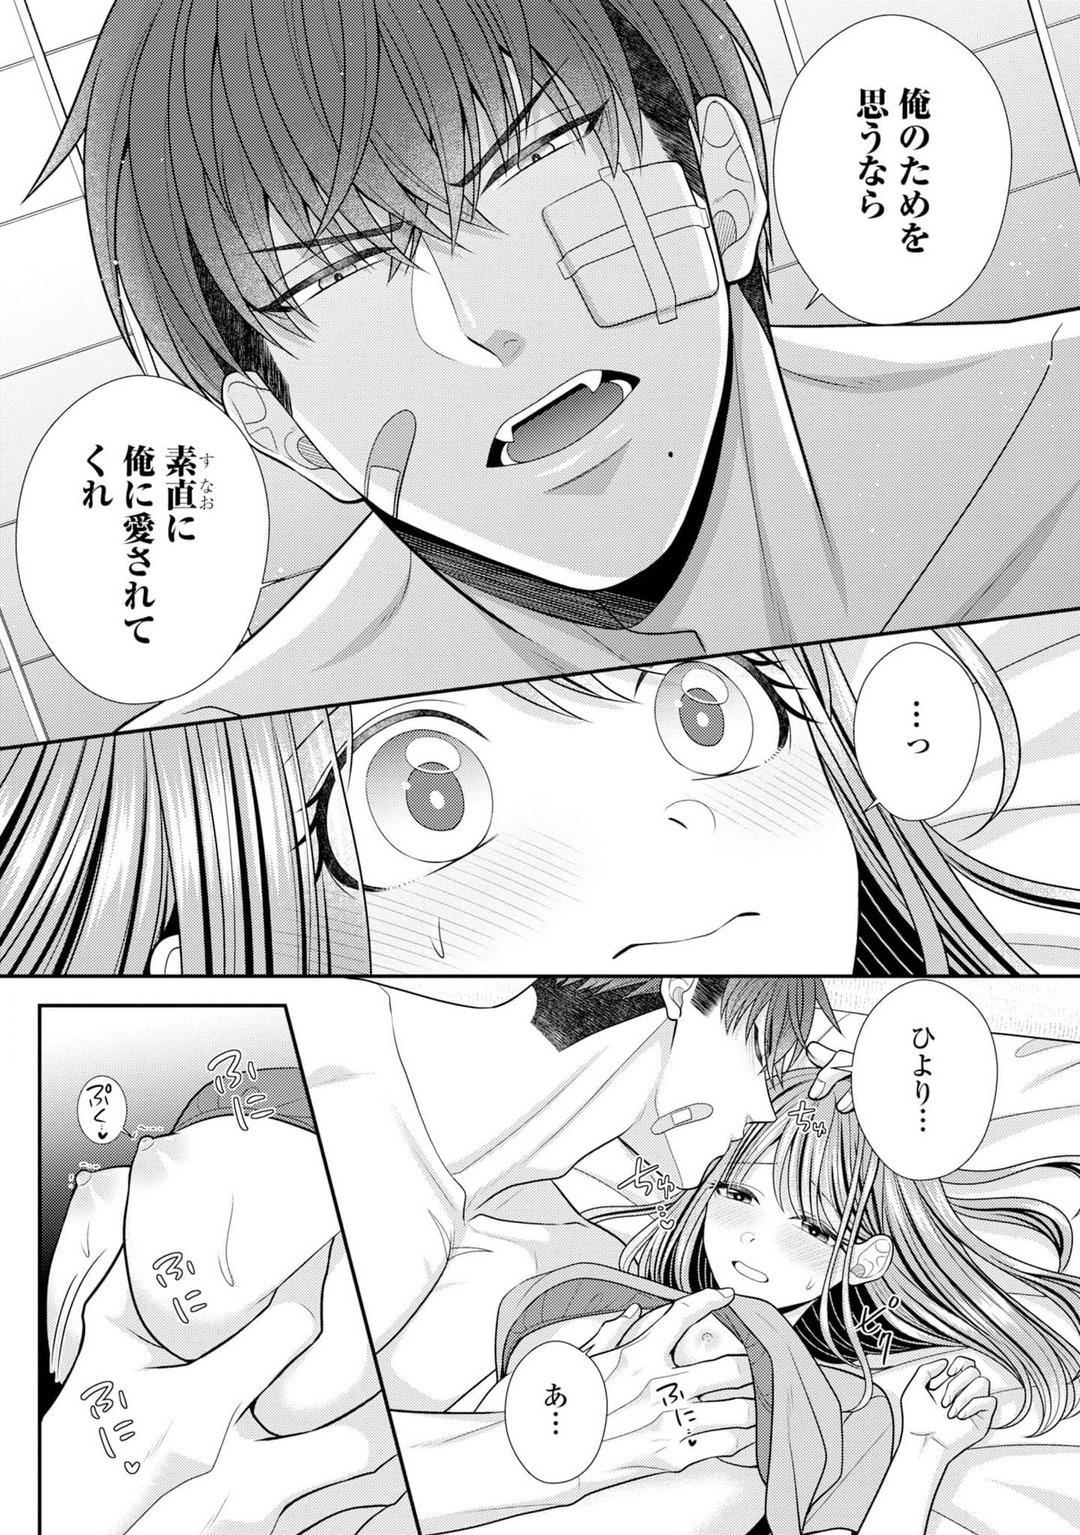 Erotic Sono Keisatsukan, Tokidoki Yajuu! 40 Kinky - Page 4